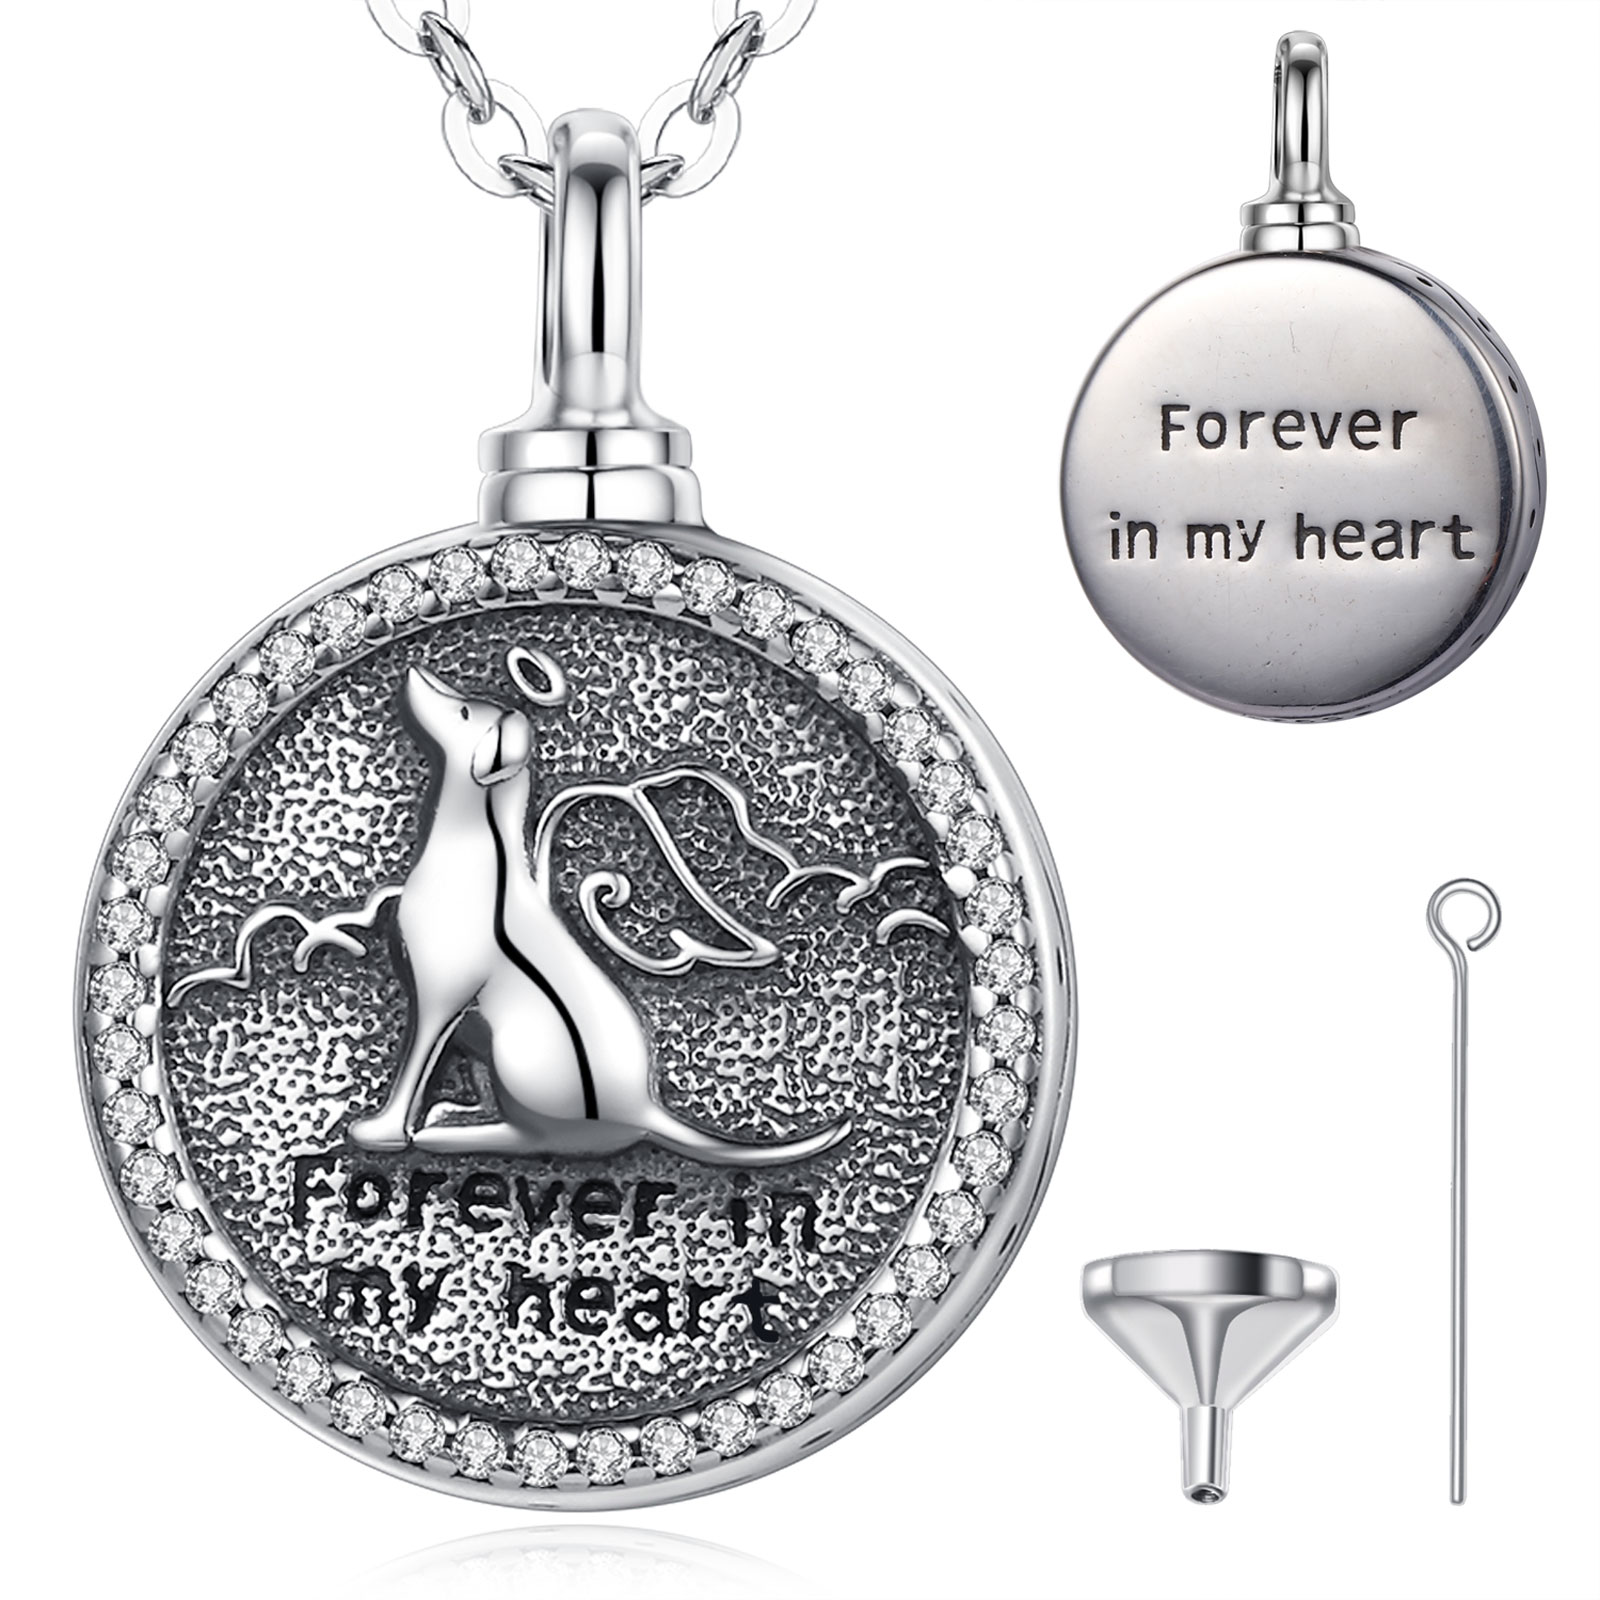 Merryshine jewelry keepsake s925 sterling silver angel dog pets cremation urn pendants necklaces